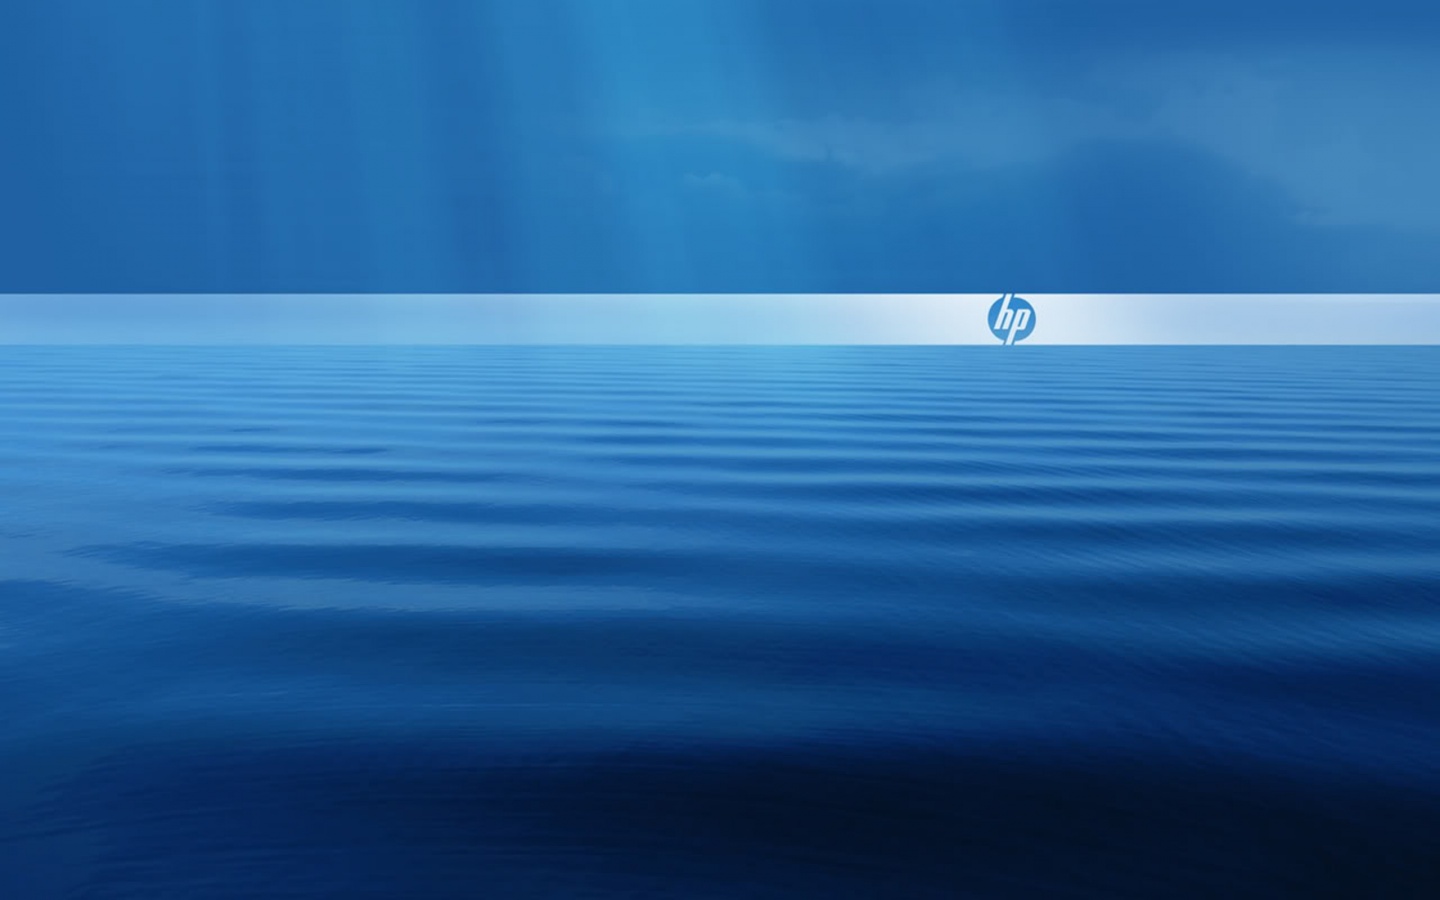 Hewlett Packard Desktop Background S